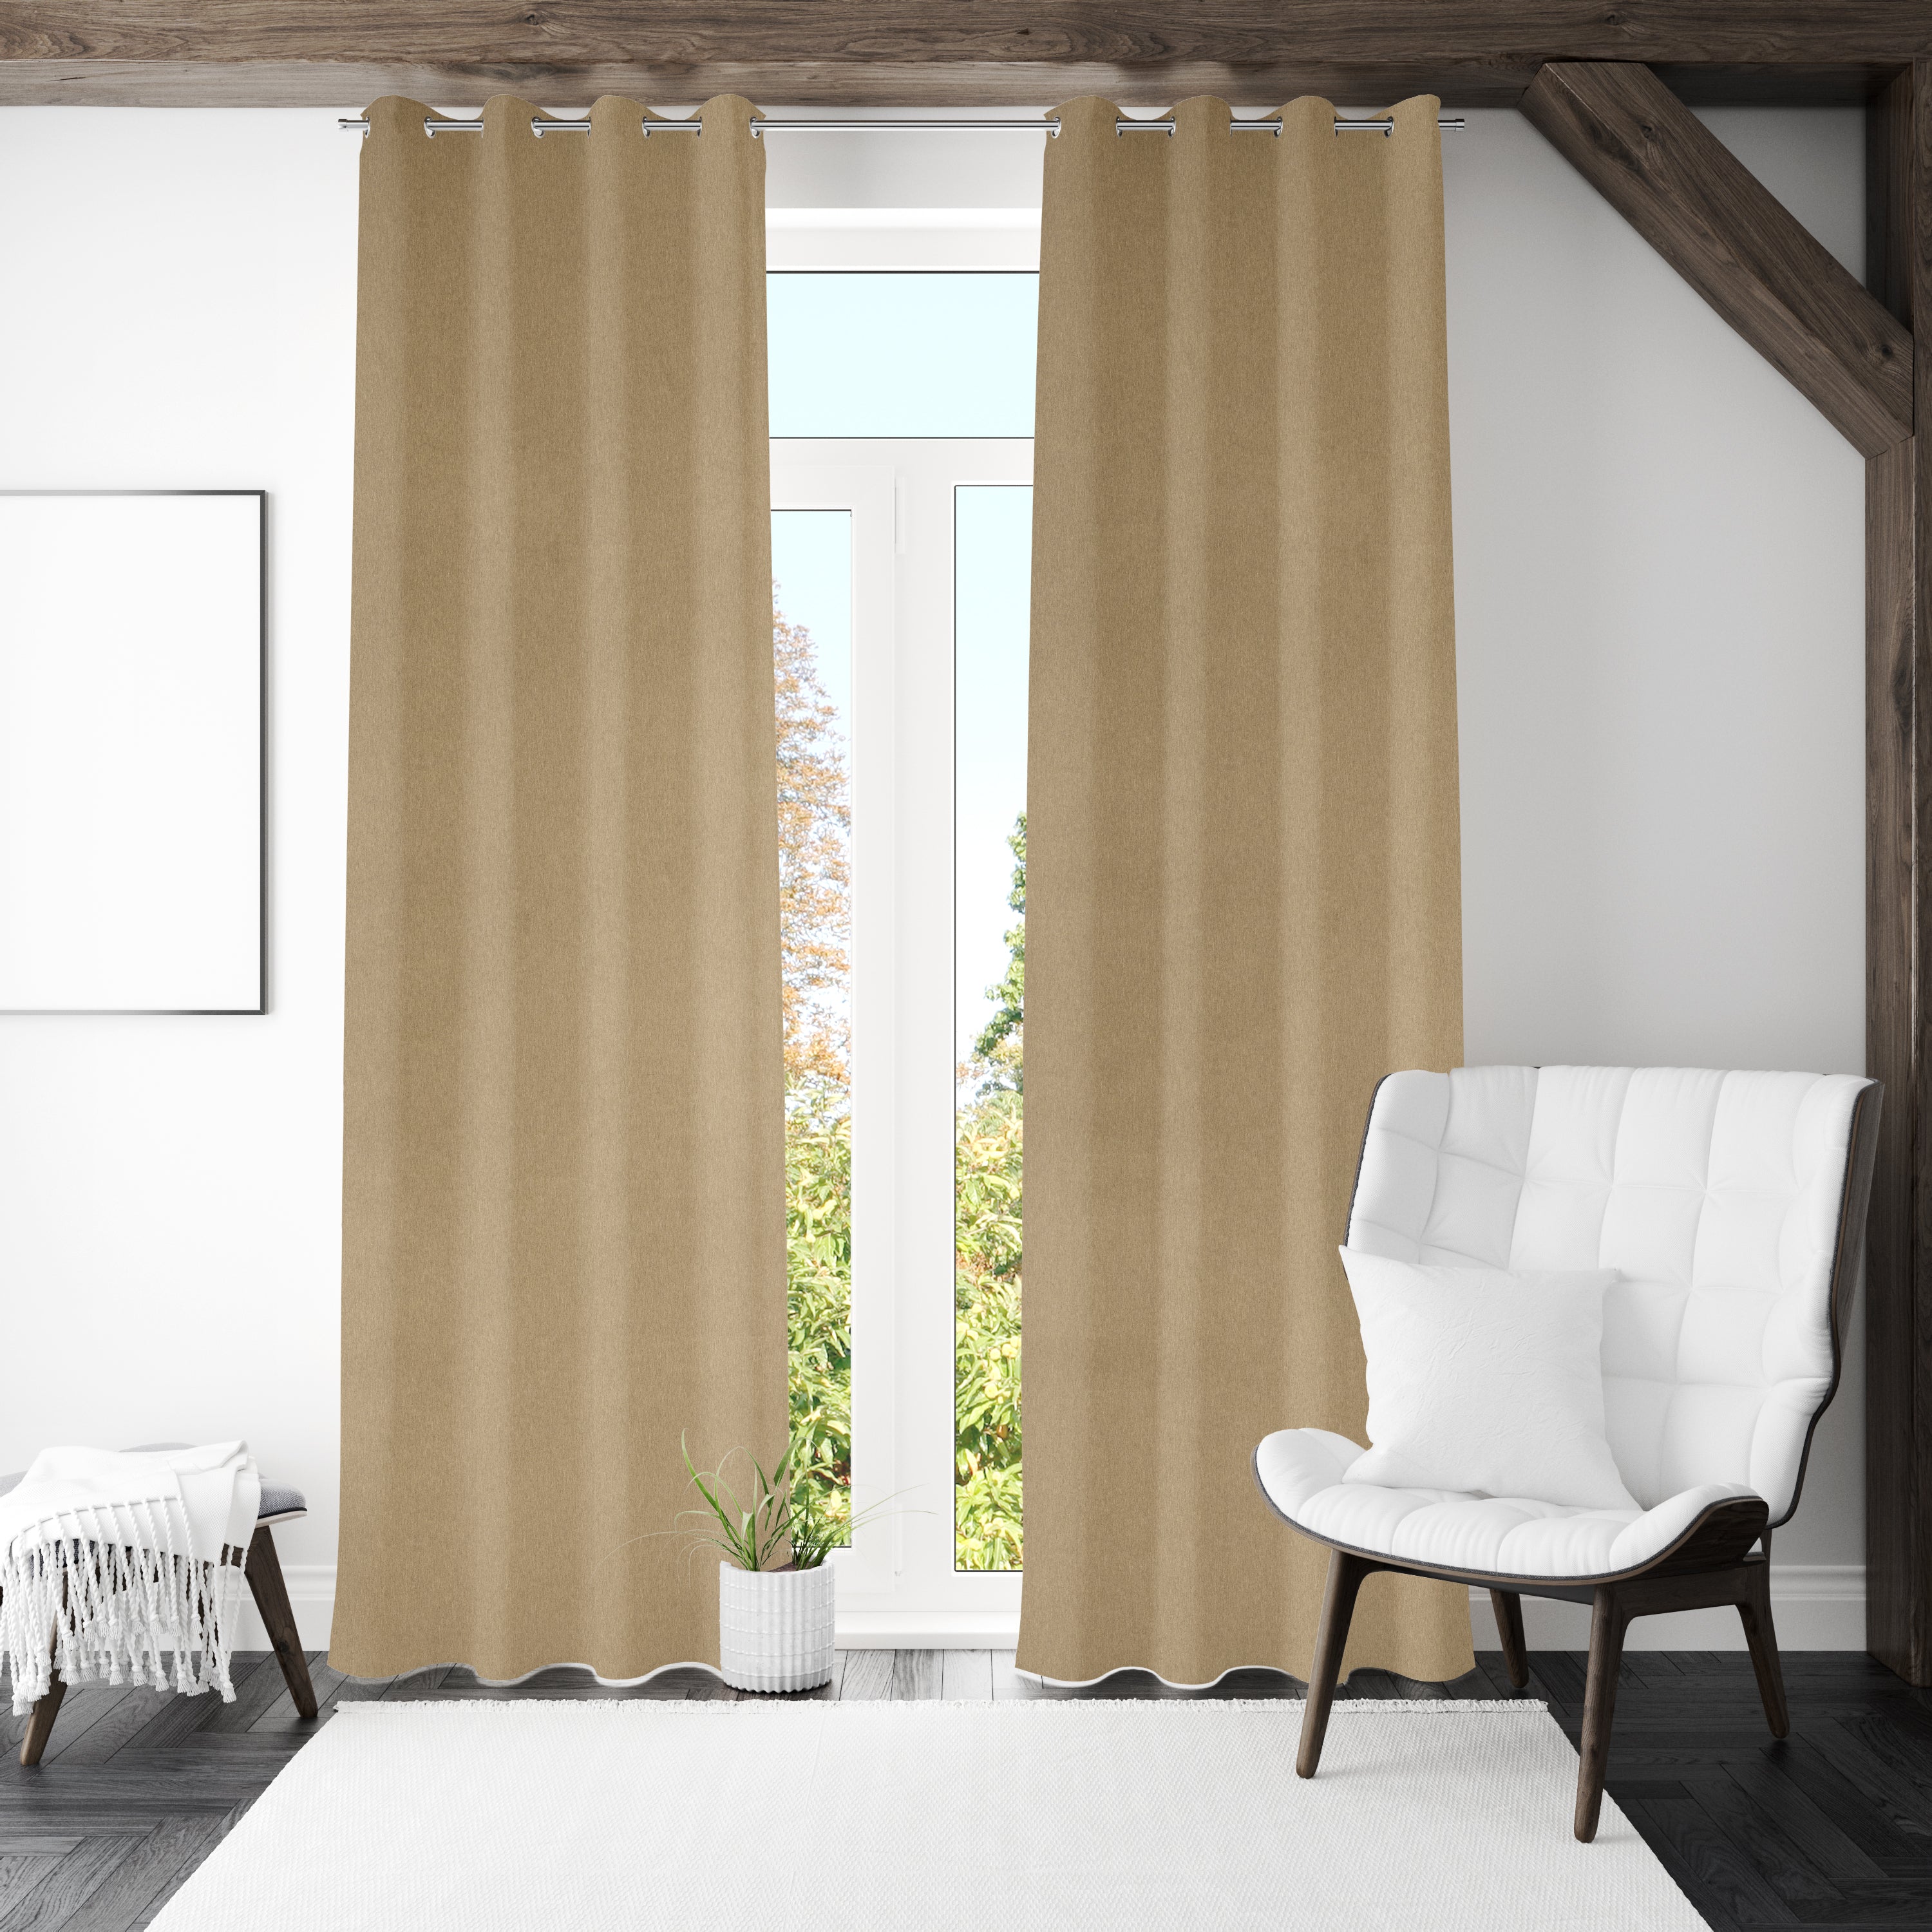 Visto Solid Blackout 7 Ft Polyester Door Curtains Set of 2 (Beige)